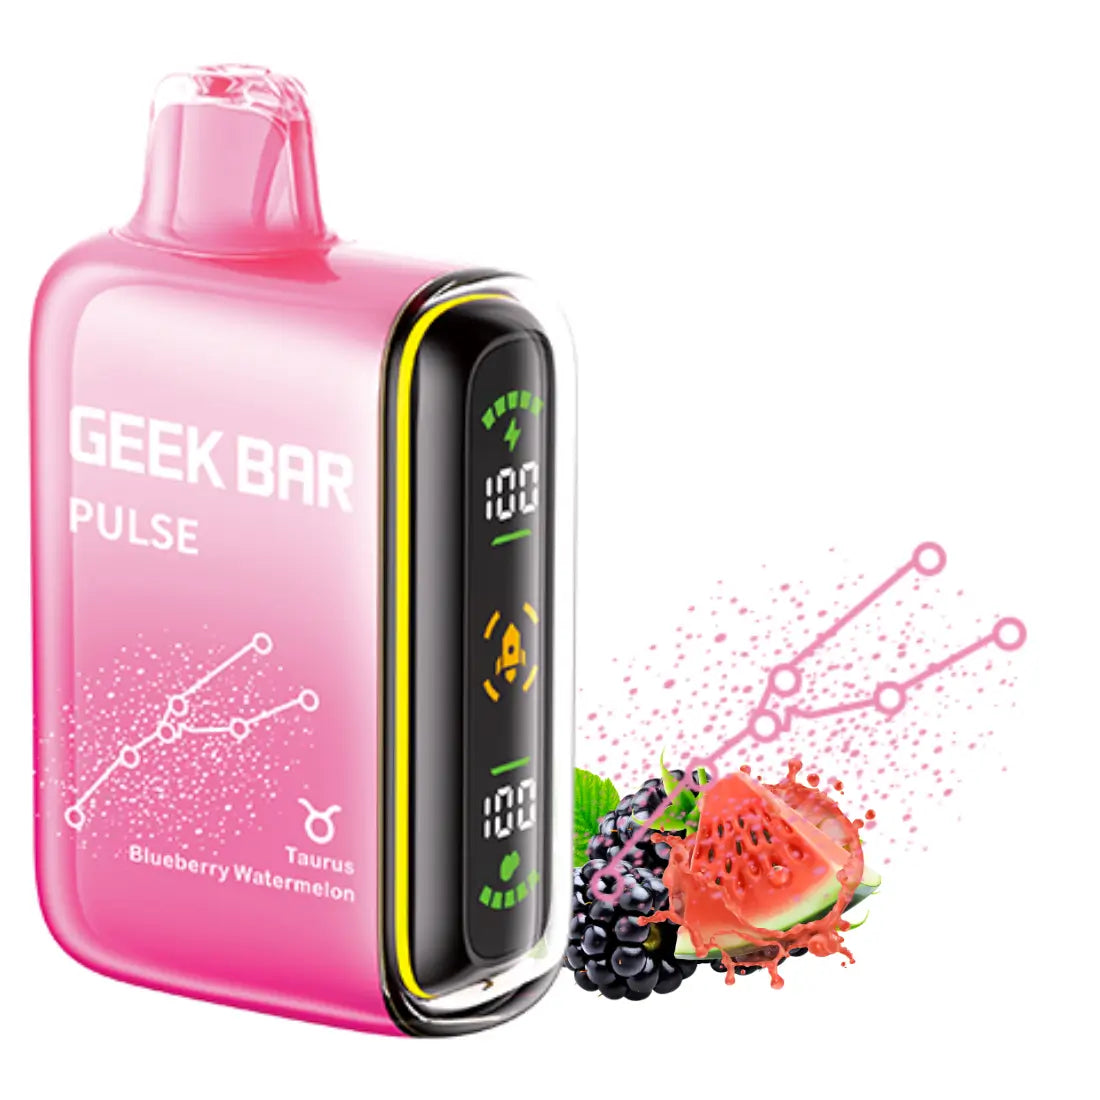 Geek Bar Pulse New York Blueberry Watermelon